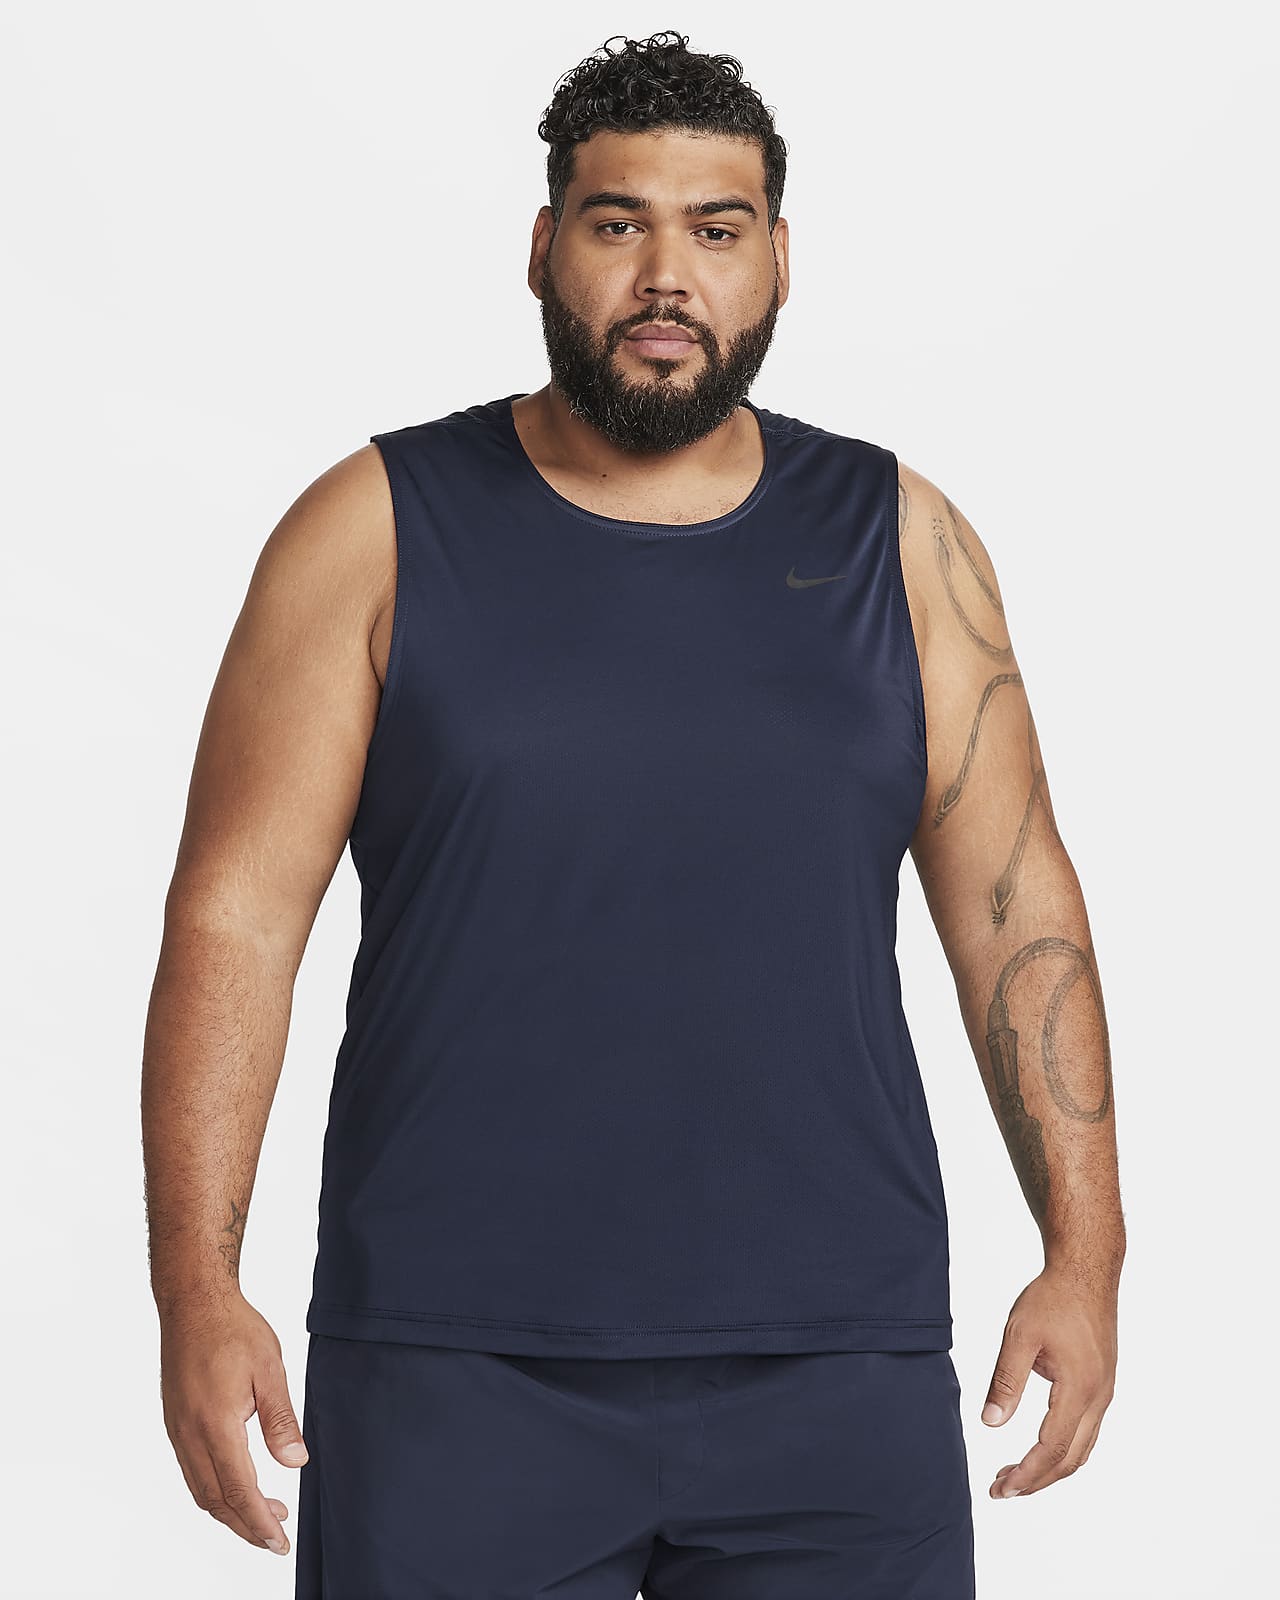 Men’s Sleeveless Tank Top Dry Fit Workout Tee Shirt - Heather Light Grey / S